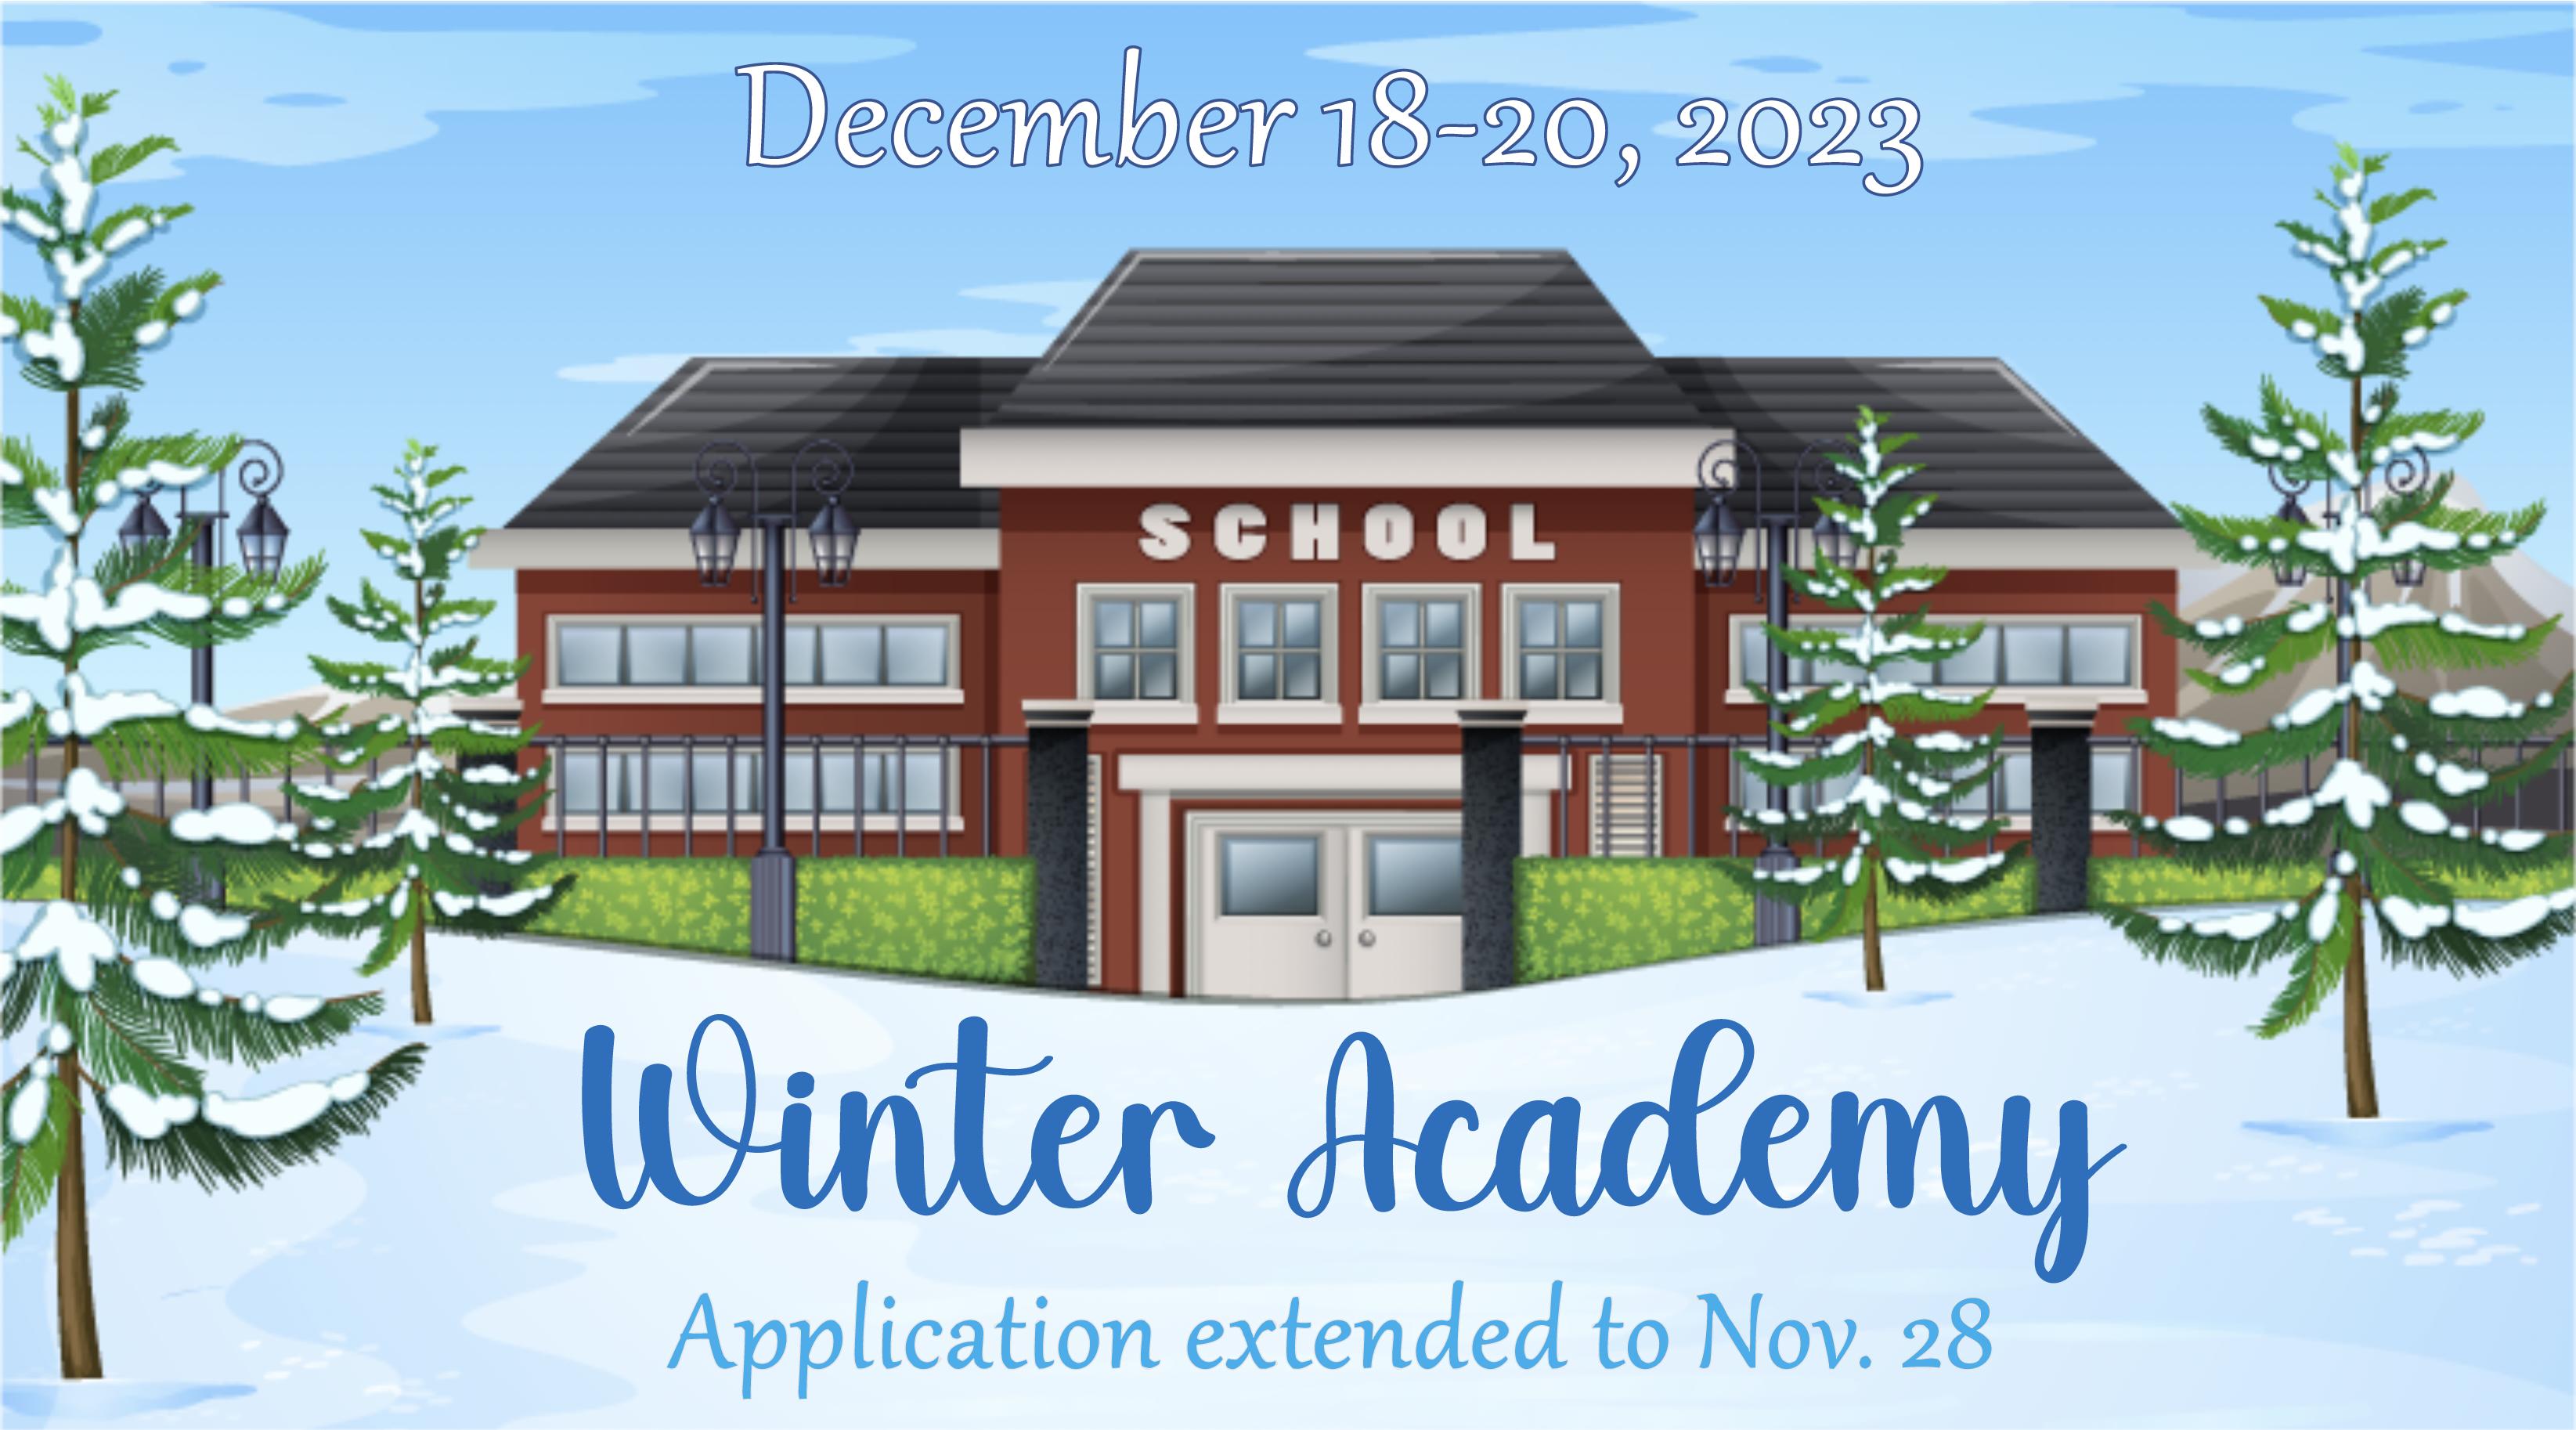 Winter Academy